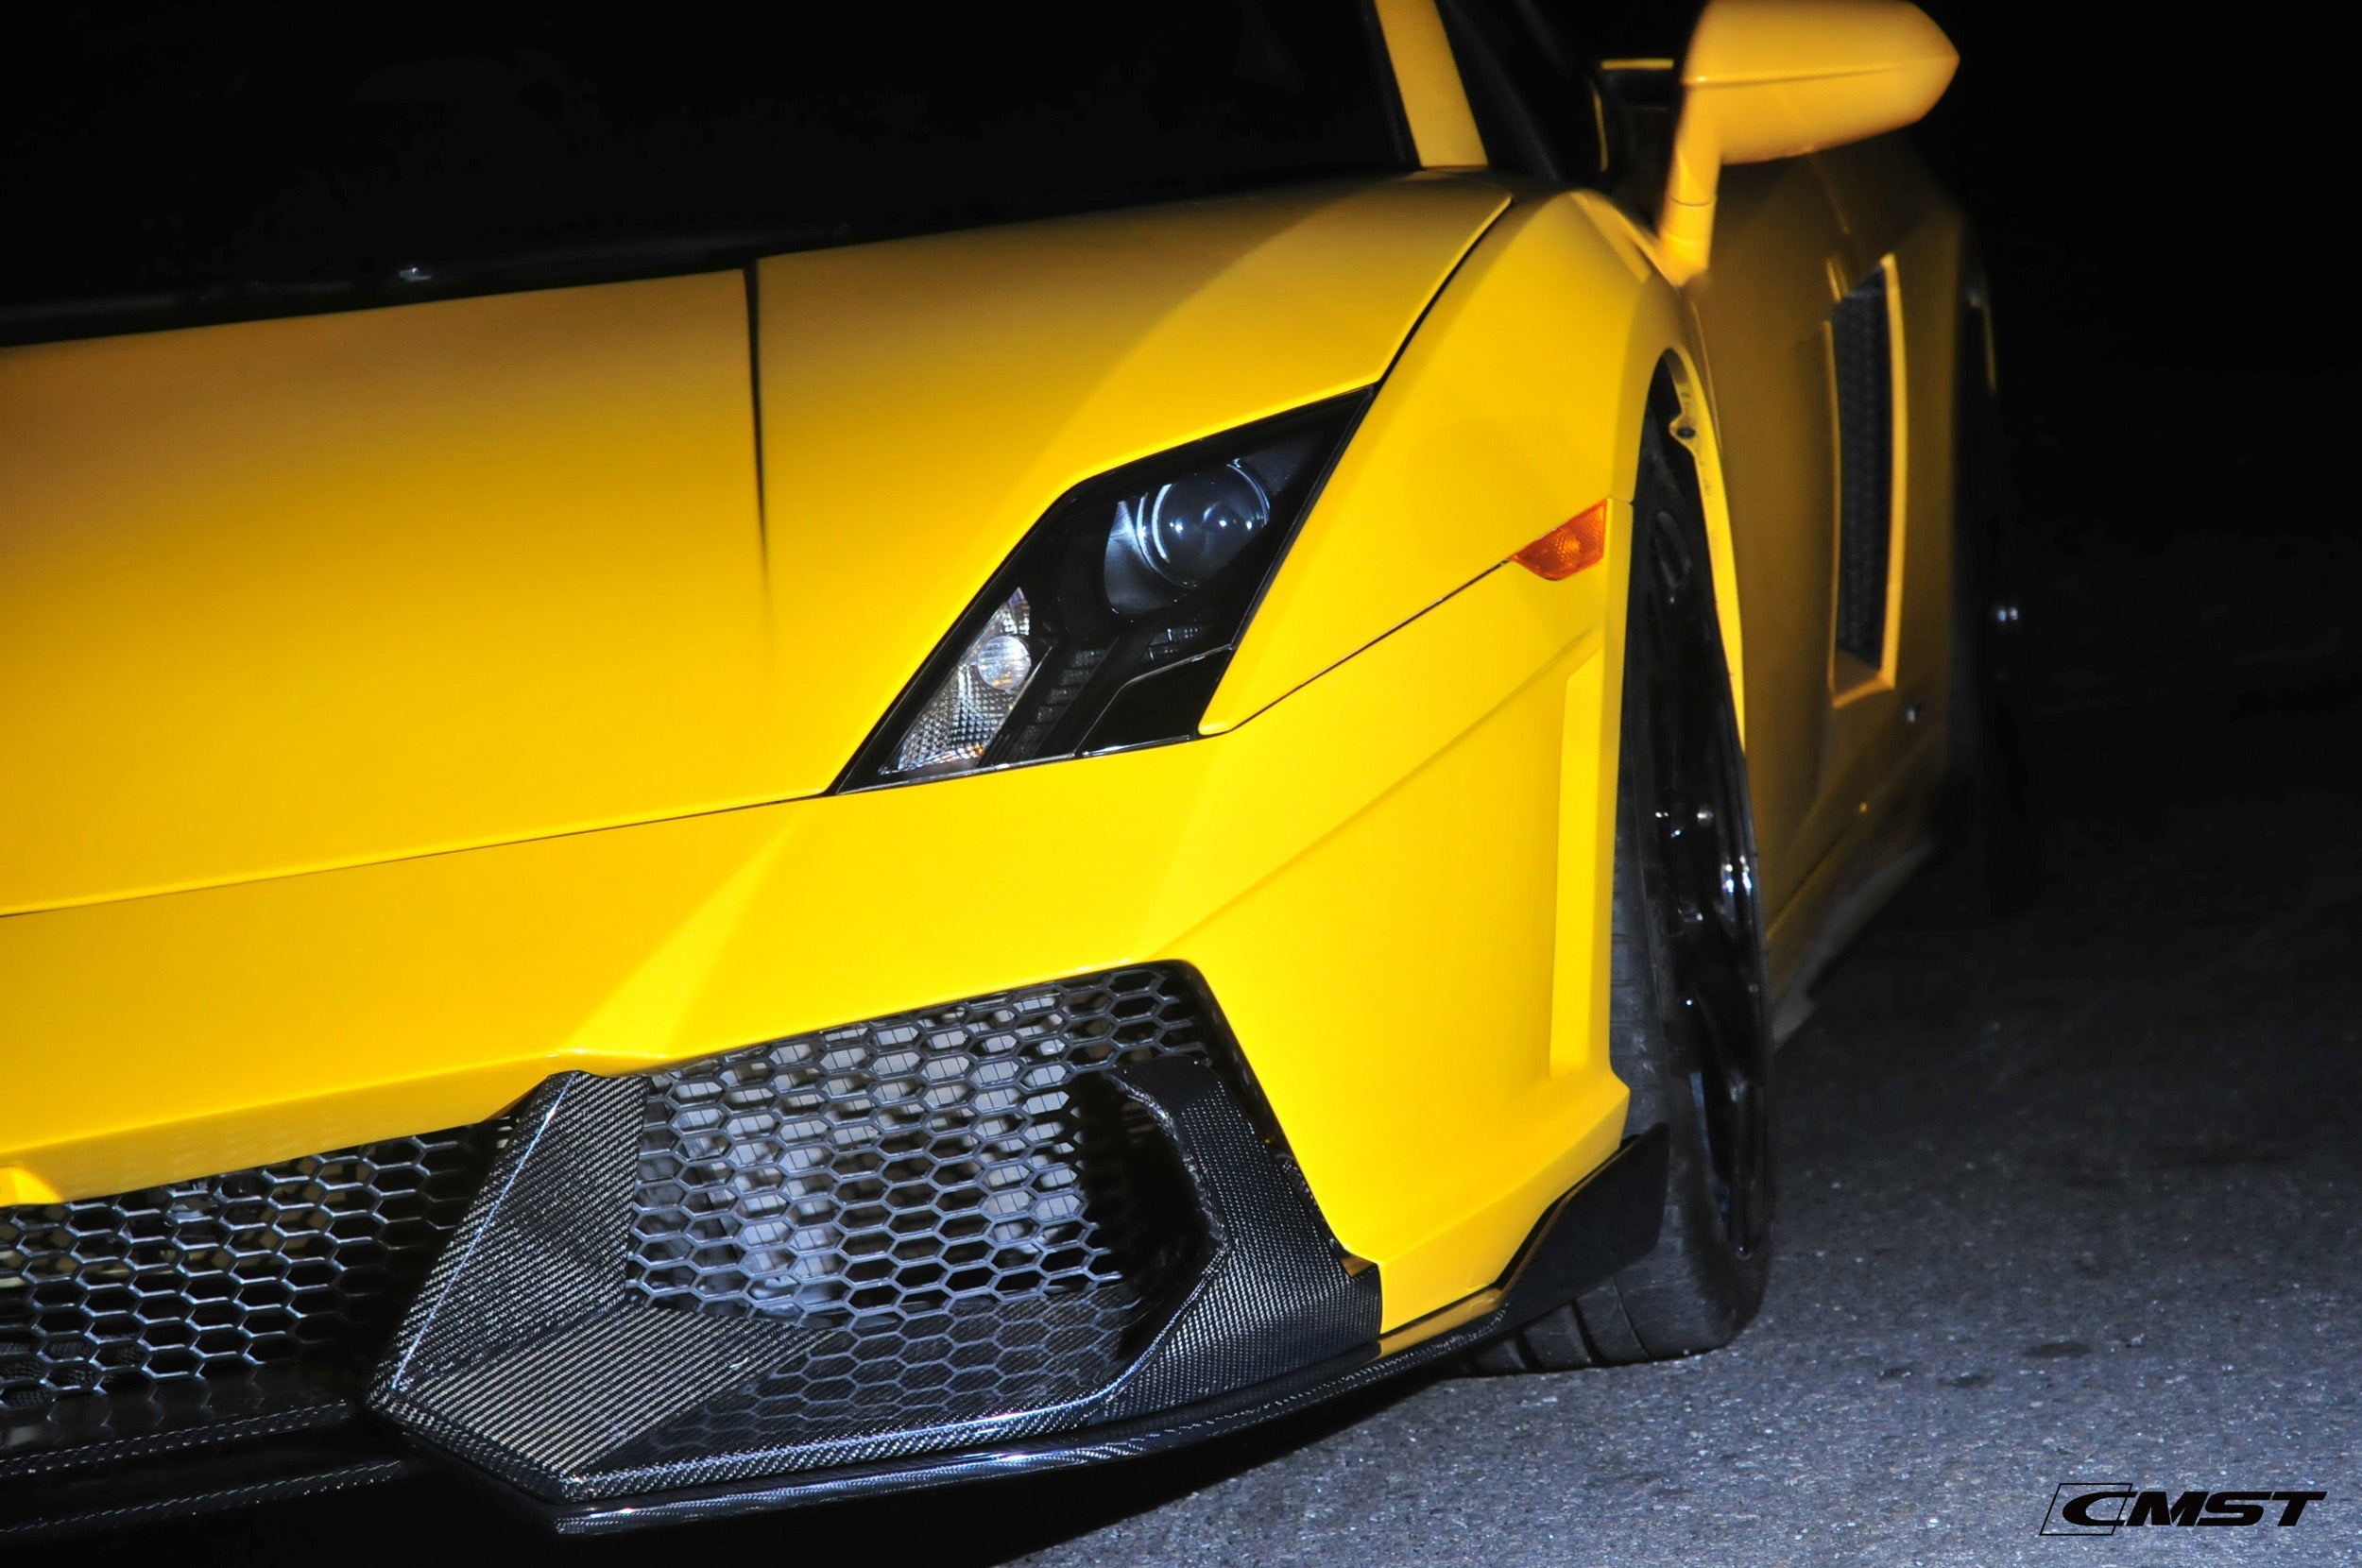 CMST Tuning Carbon Fiber Front Bumper & Front Lip for Lamborghini Gallardo 2009-2014